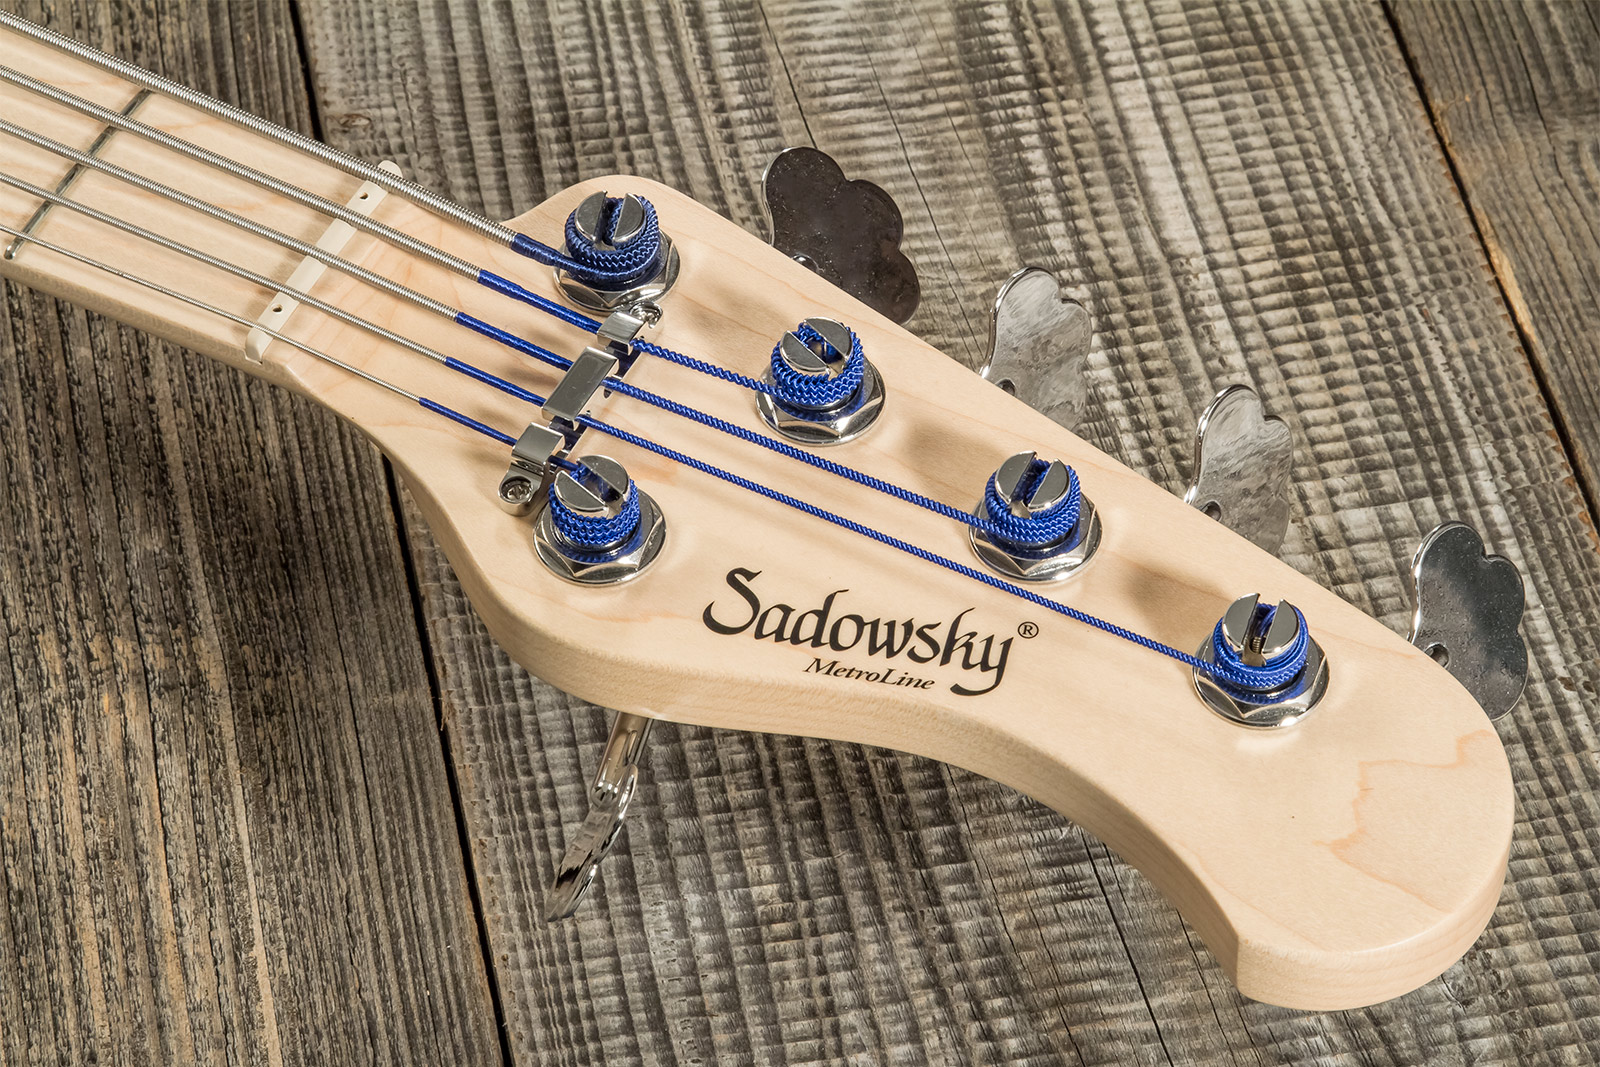 Sadowsky Single Cut Bass 24f Ash 5c Metroline All Active Mn - Satin Black Pearl - Solid body elektrische bas - Variation 1